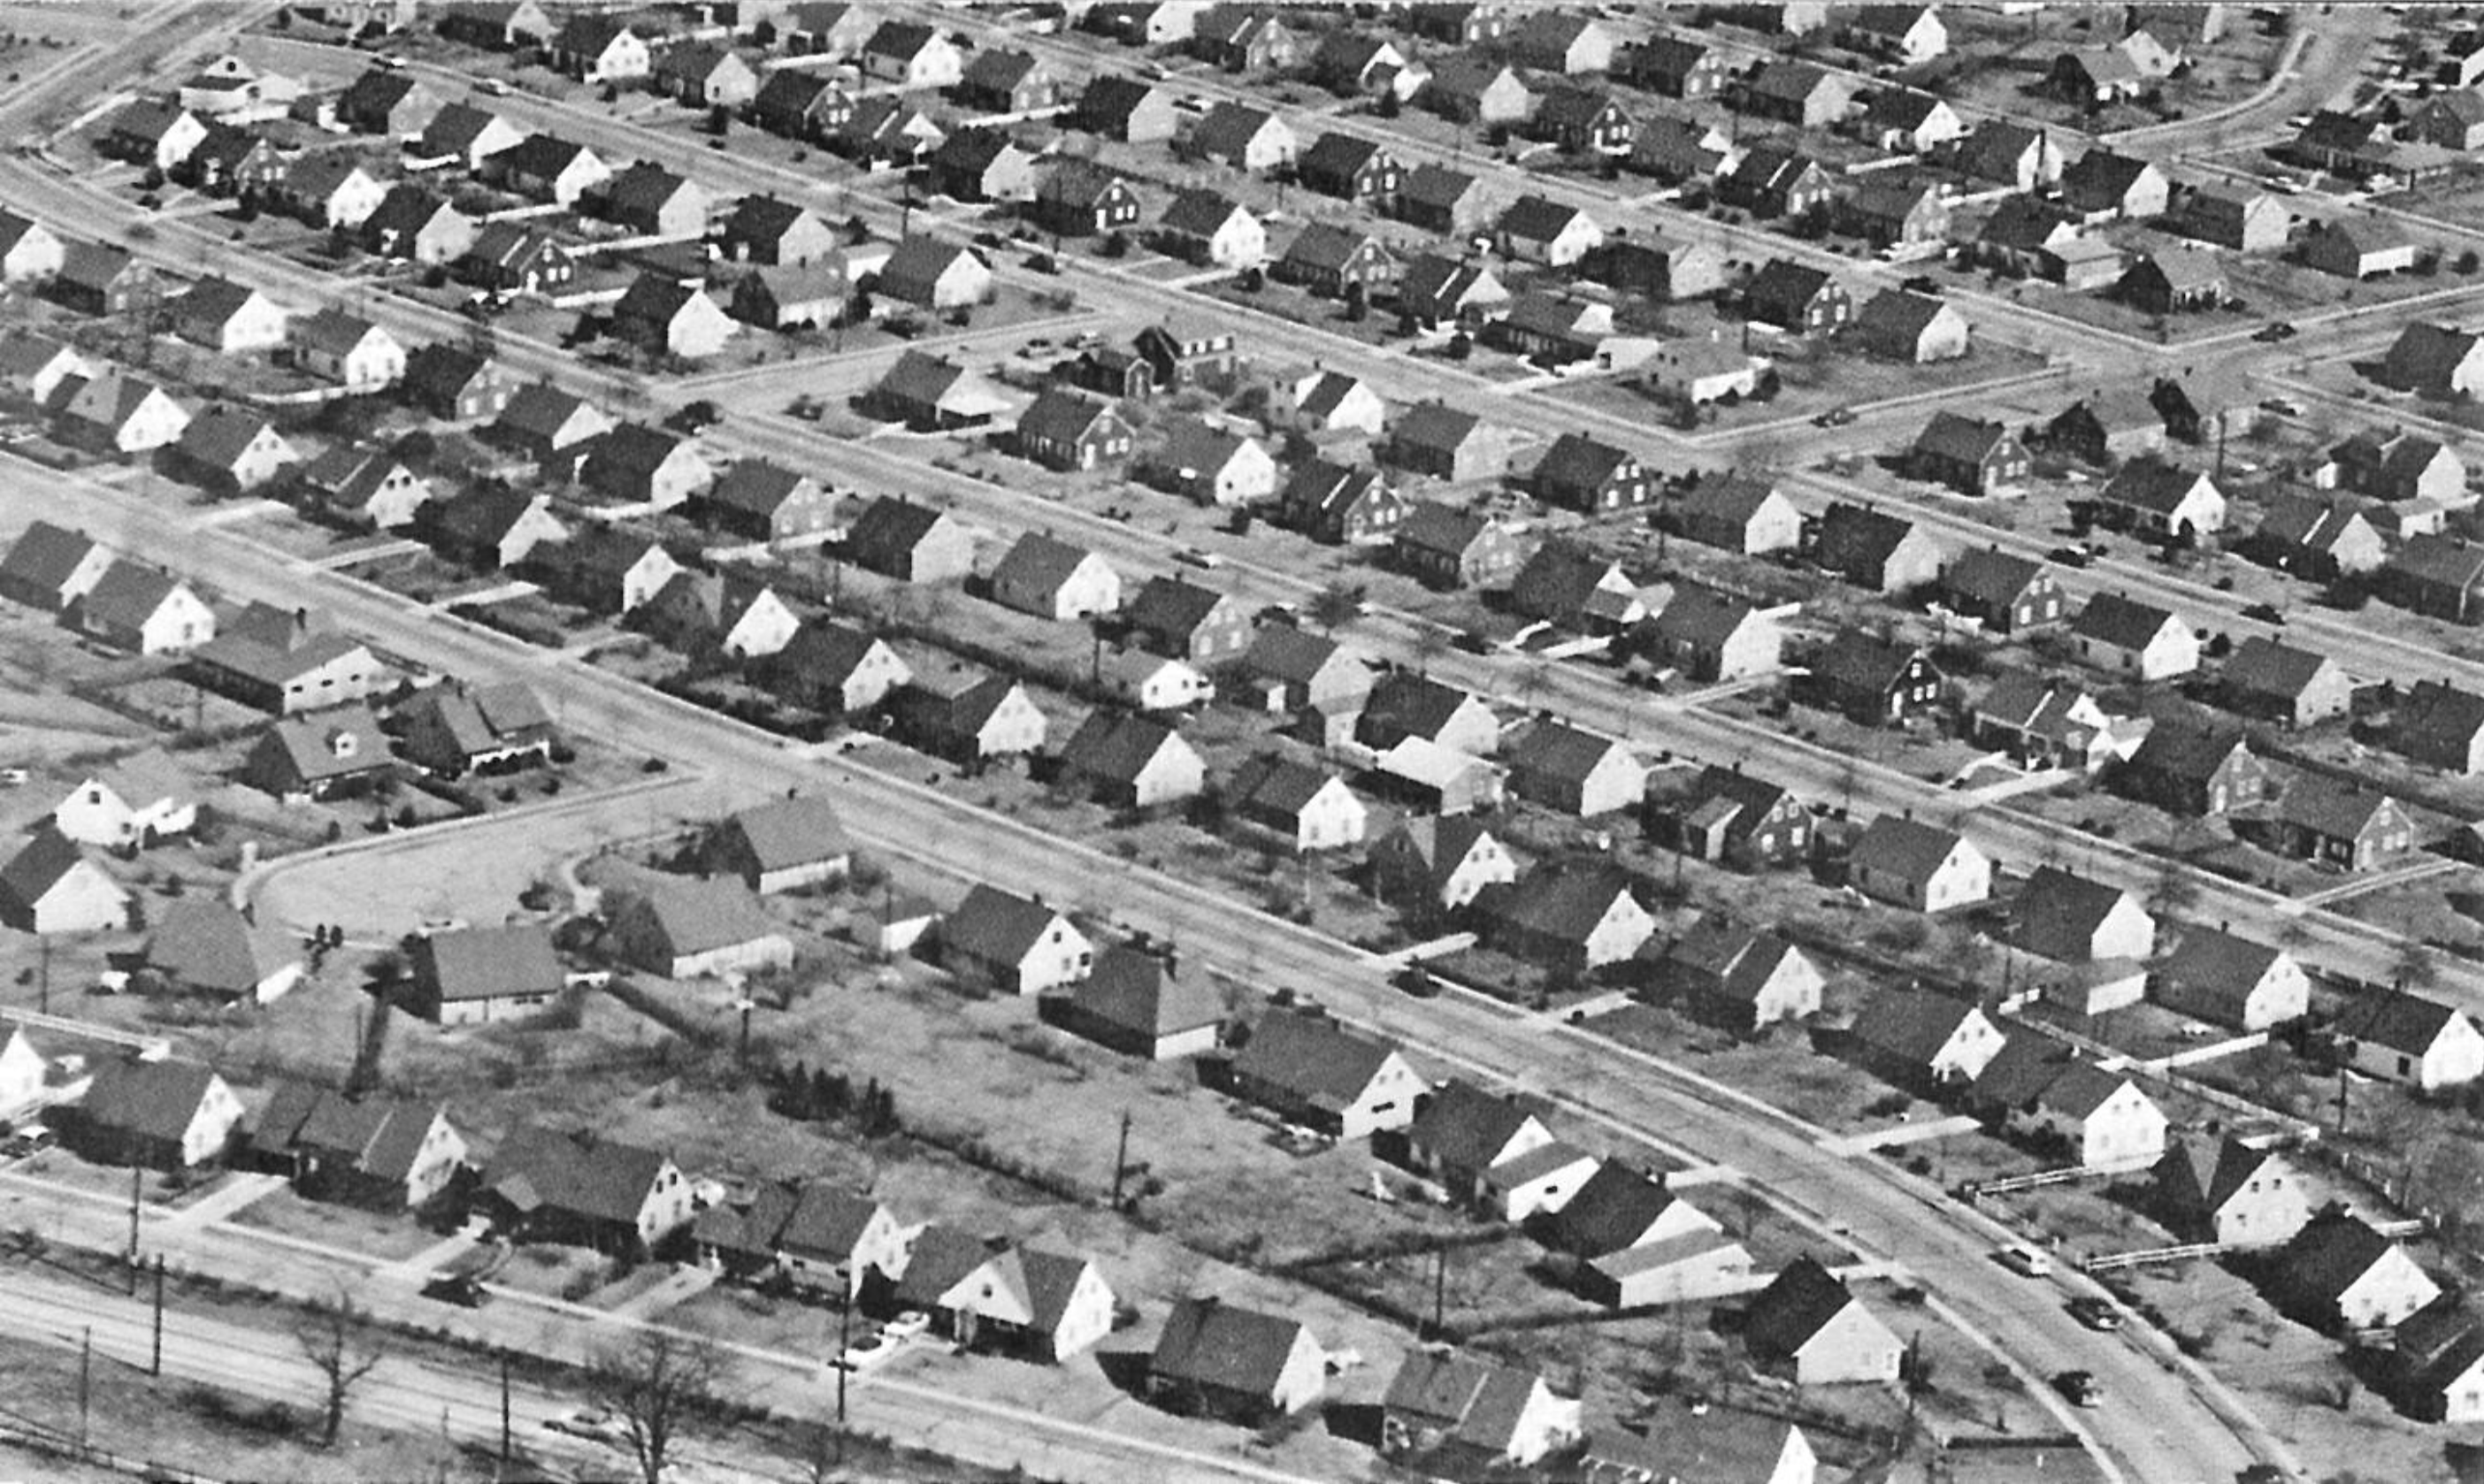 1950s suburb